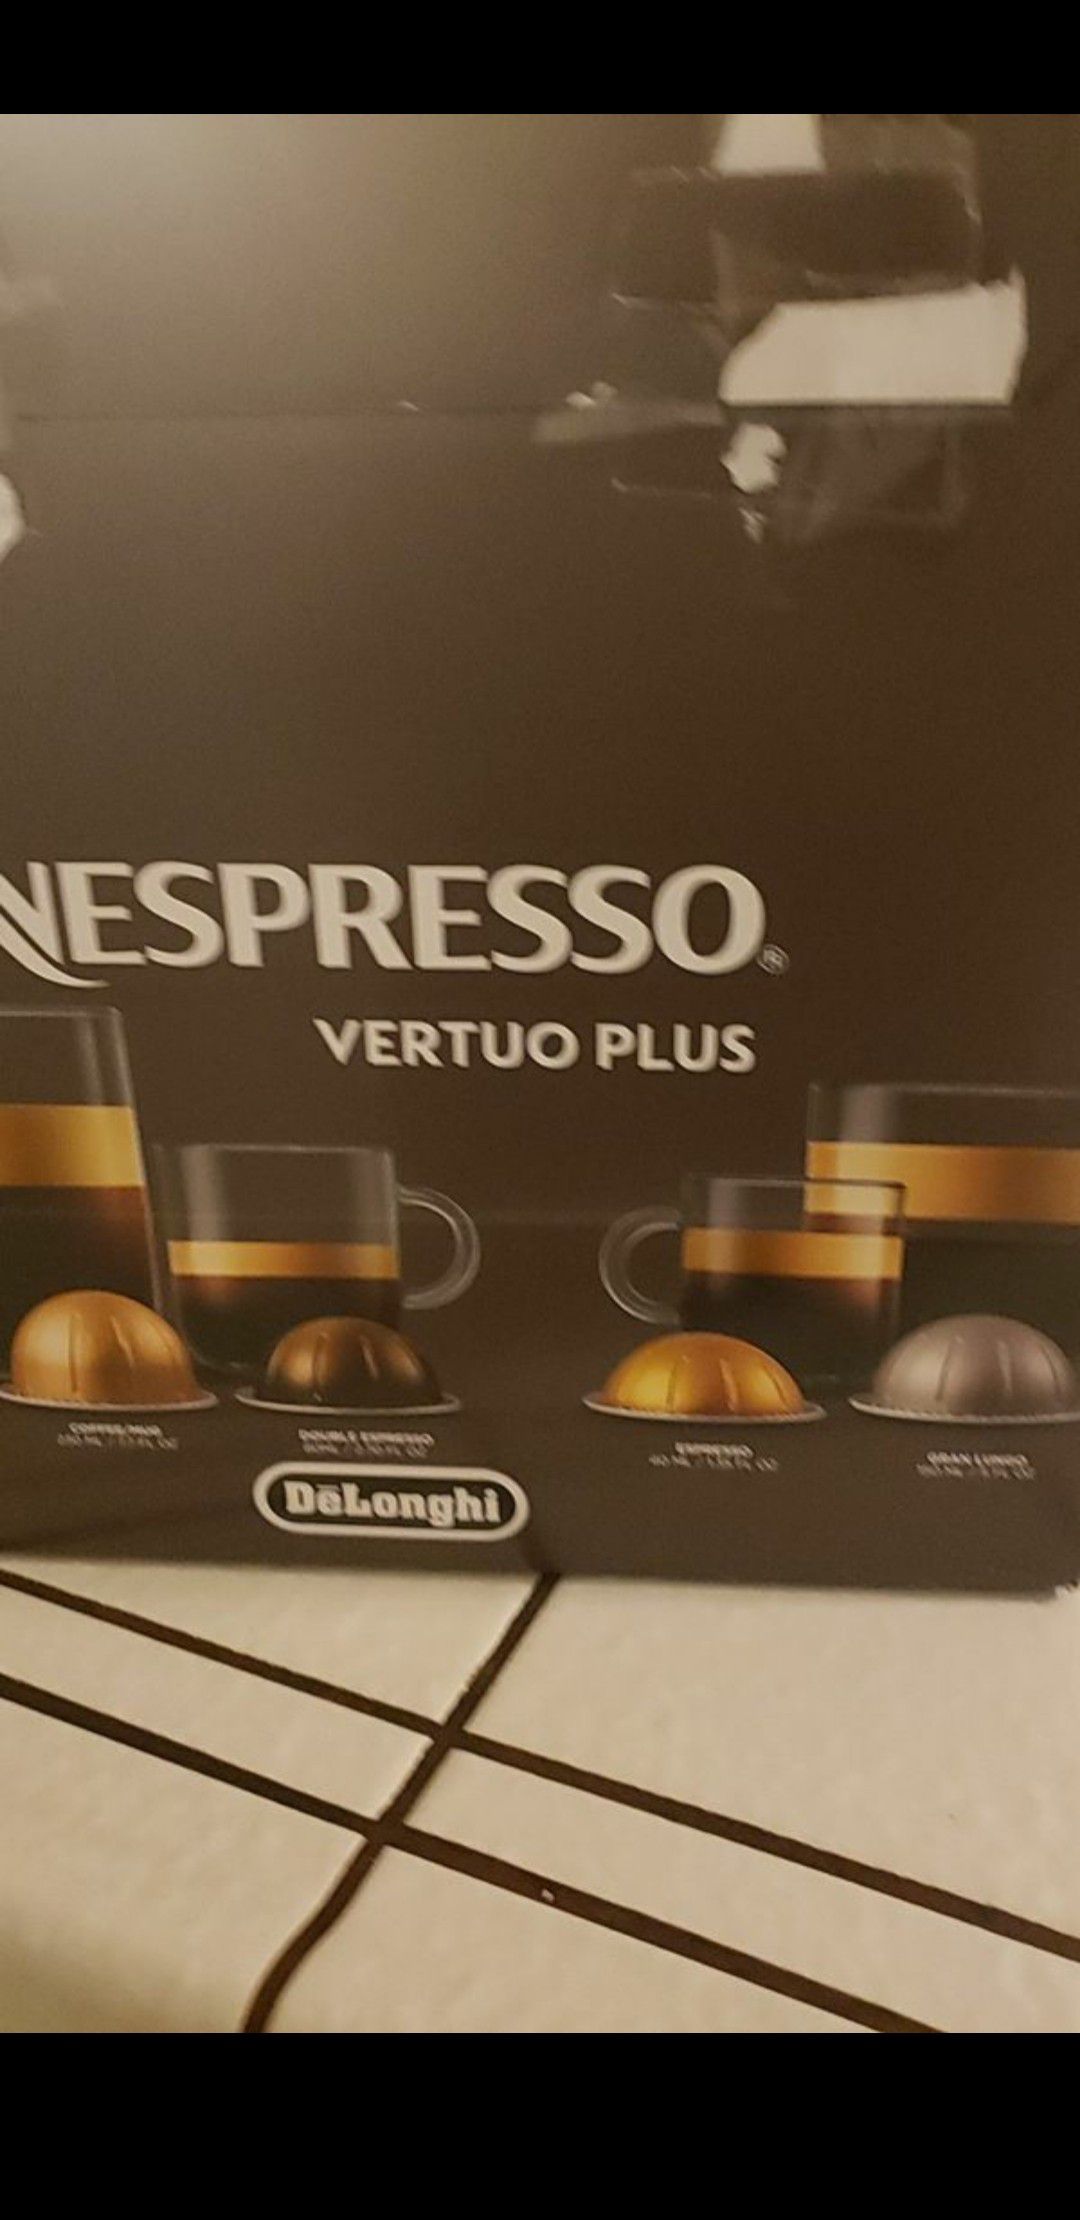 Nespress vertuo plus( new)